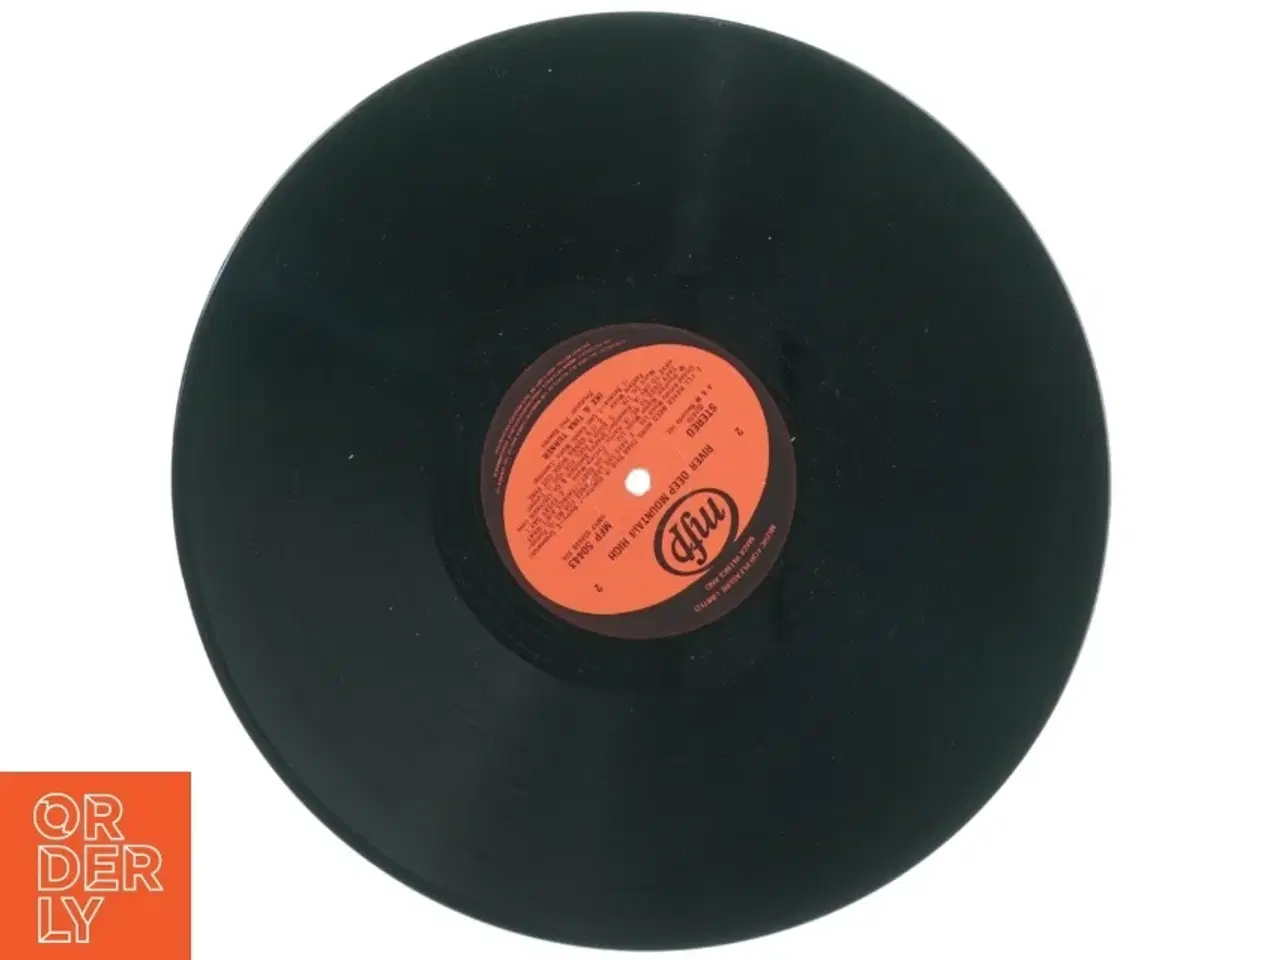 Billede 3 - Ike & Tina Turner - River Deep Mountain High Vinyl LP fra Music For Pleasure (str. 31 x 31 cm)